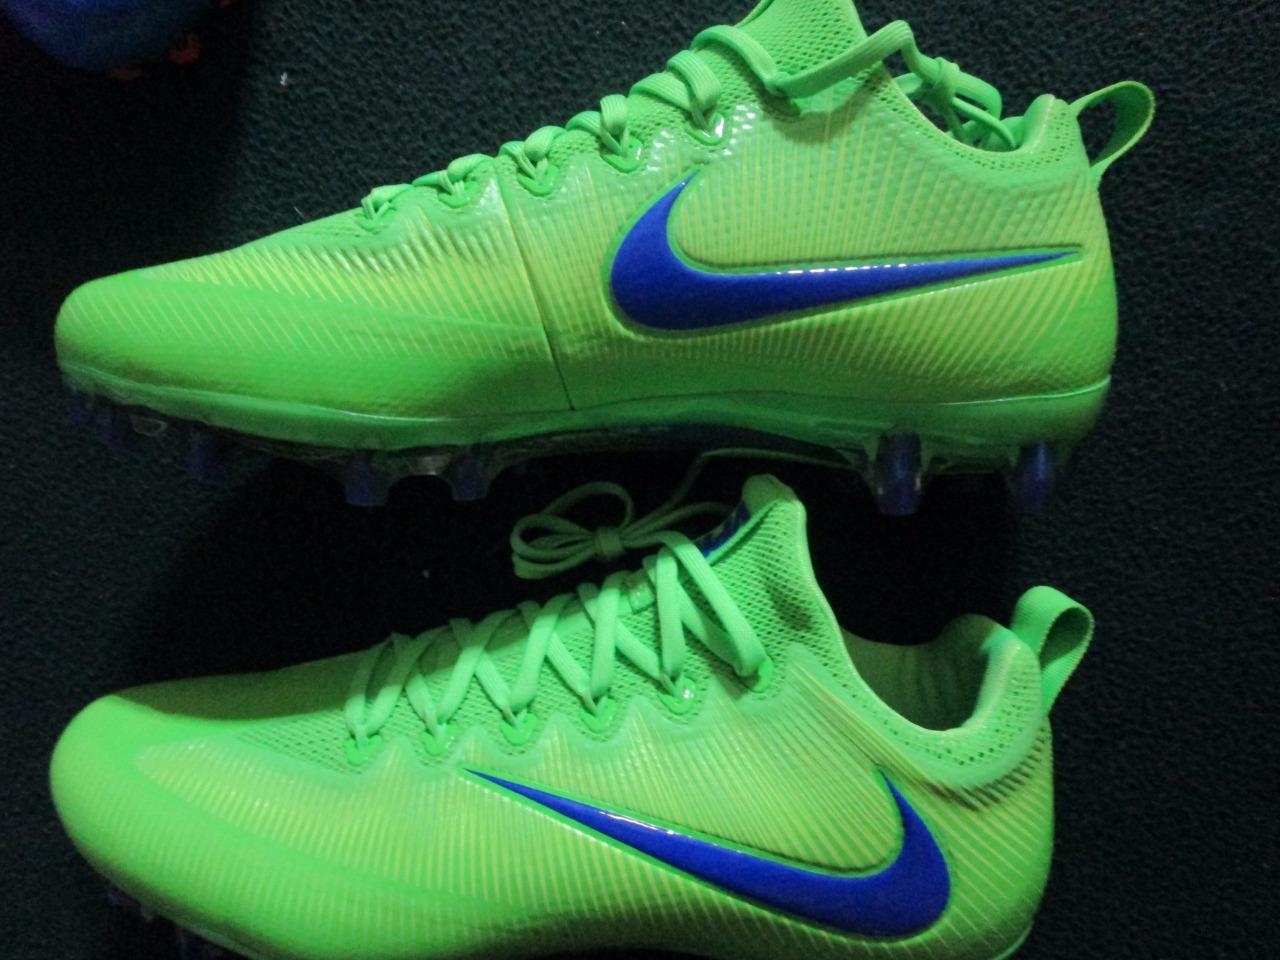 Nike Vapor Untouchable Pro TD Football Cleats Various Sizes & Colors | eBay